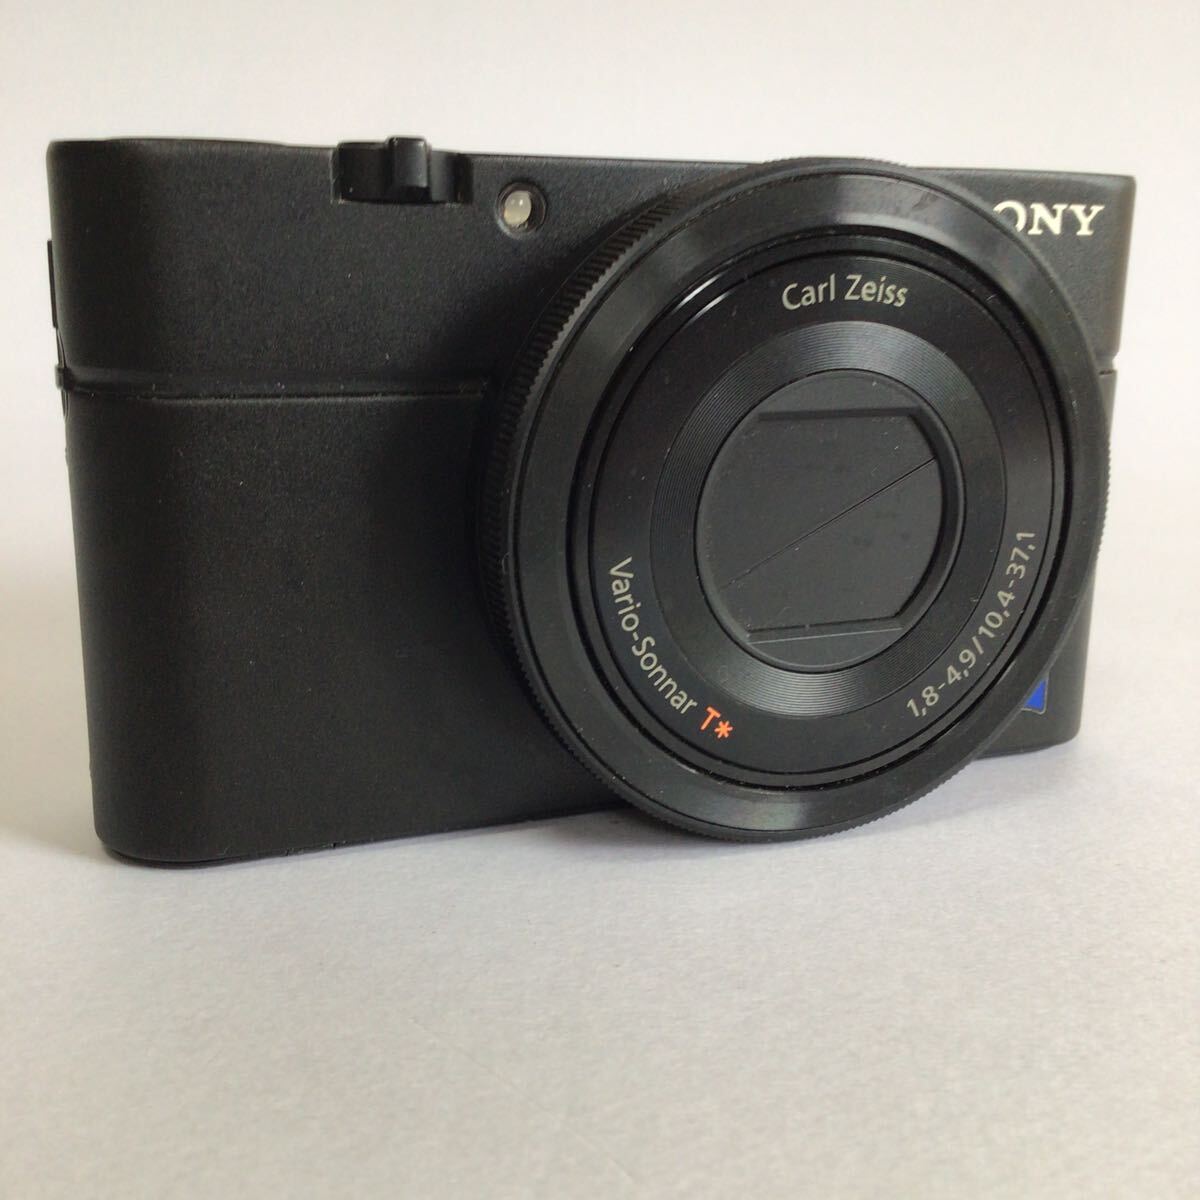 SONY Cyber-shot DSC-RX100 / Cyber Shot компактный цифровой фотоаппарат 